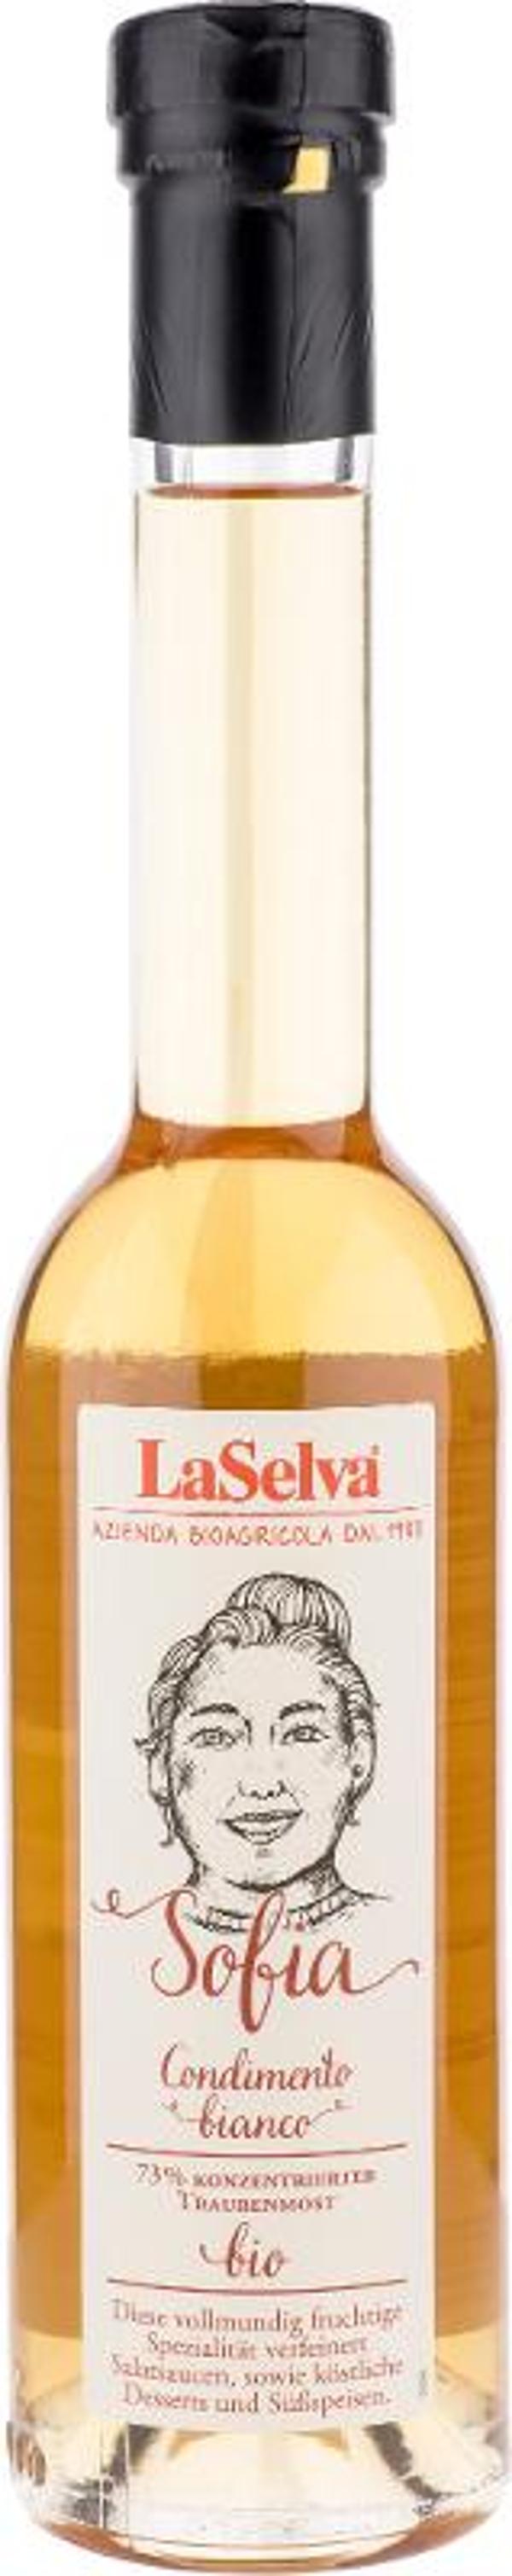 Produktfoto zu Sofia Condimento Bianco (weißer Balsamico) 250ml LaSelva